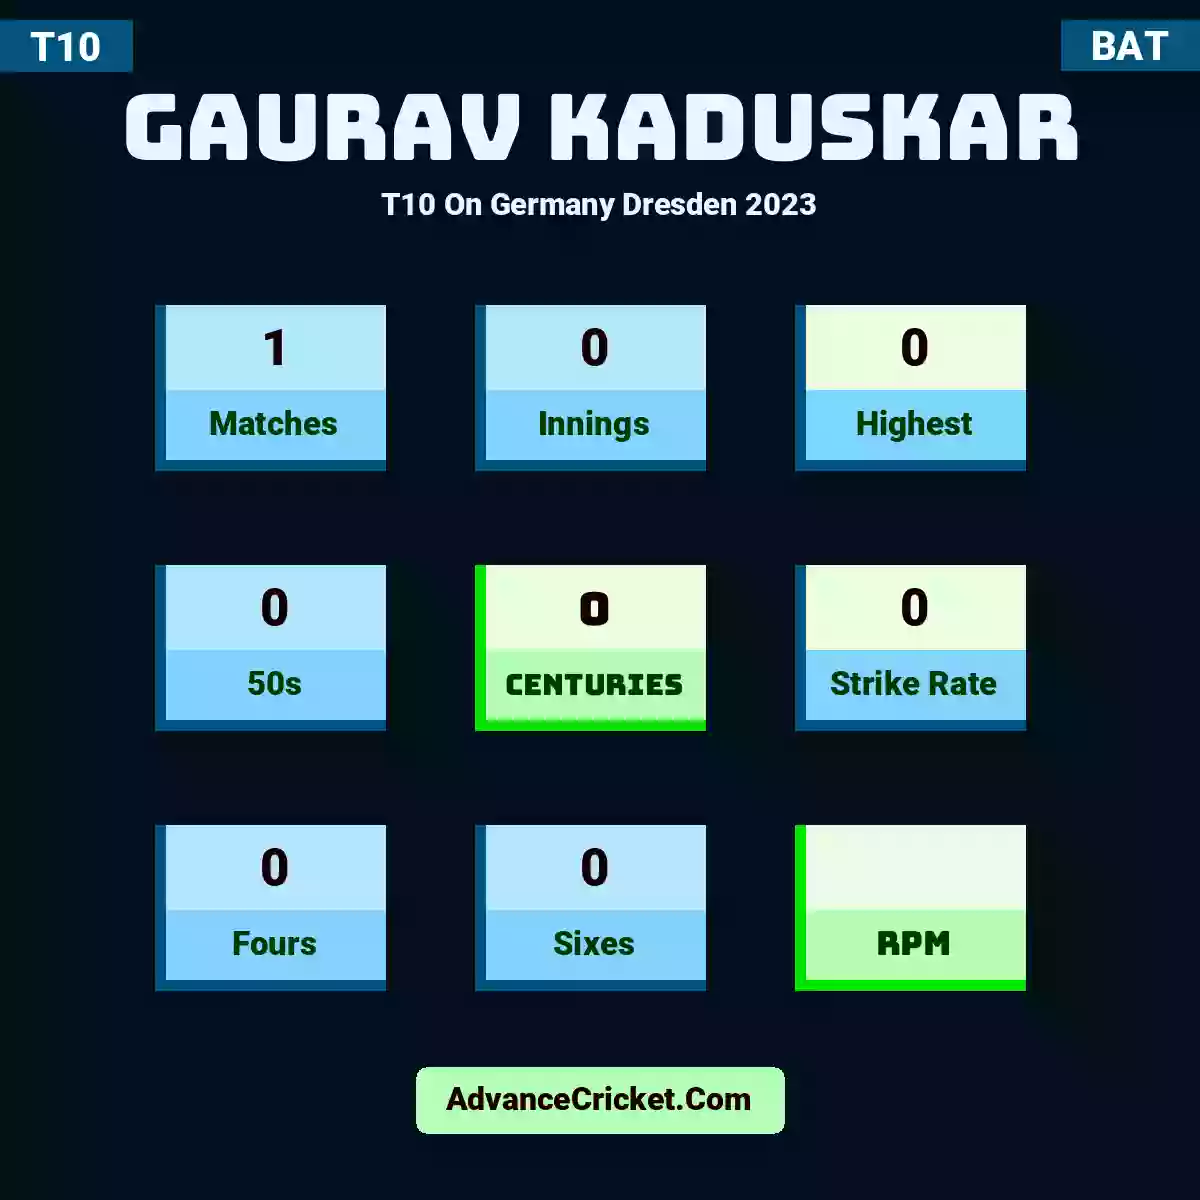 Gaurav Kaduskar T10  On Germany Dresden 2023, Gaurav Kaduskar played 1 matches, scored 0 runs as highest, 0 half-centuries, and 0 centuries, with a strike rate of 0. G.Kaduskar hit 0 fours and 0 sixes.